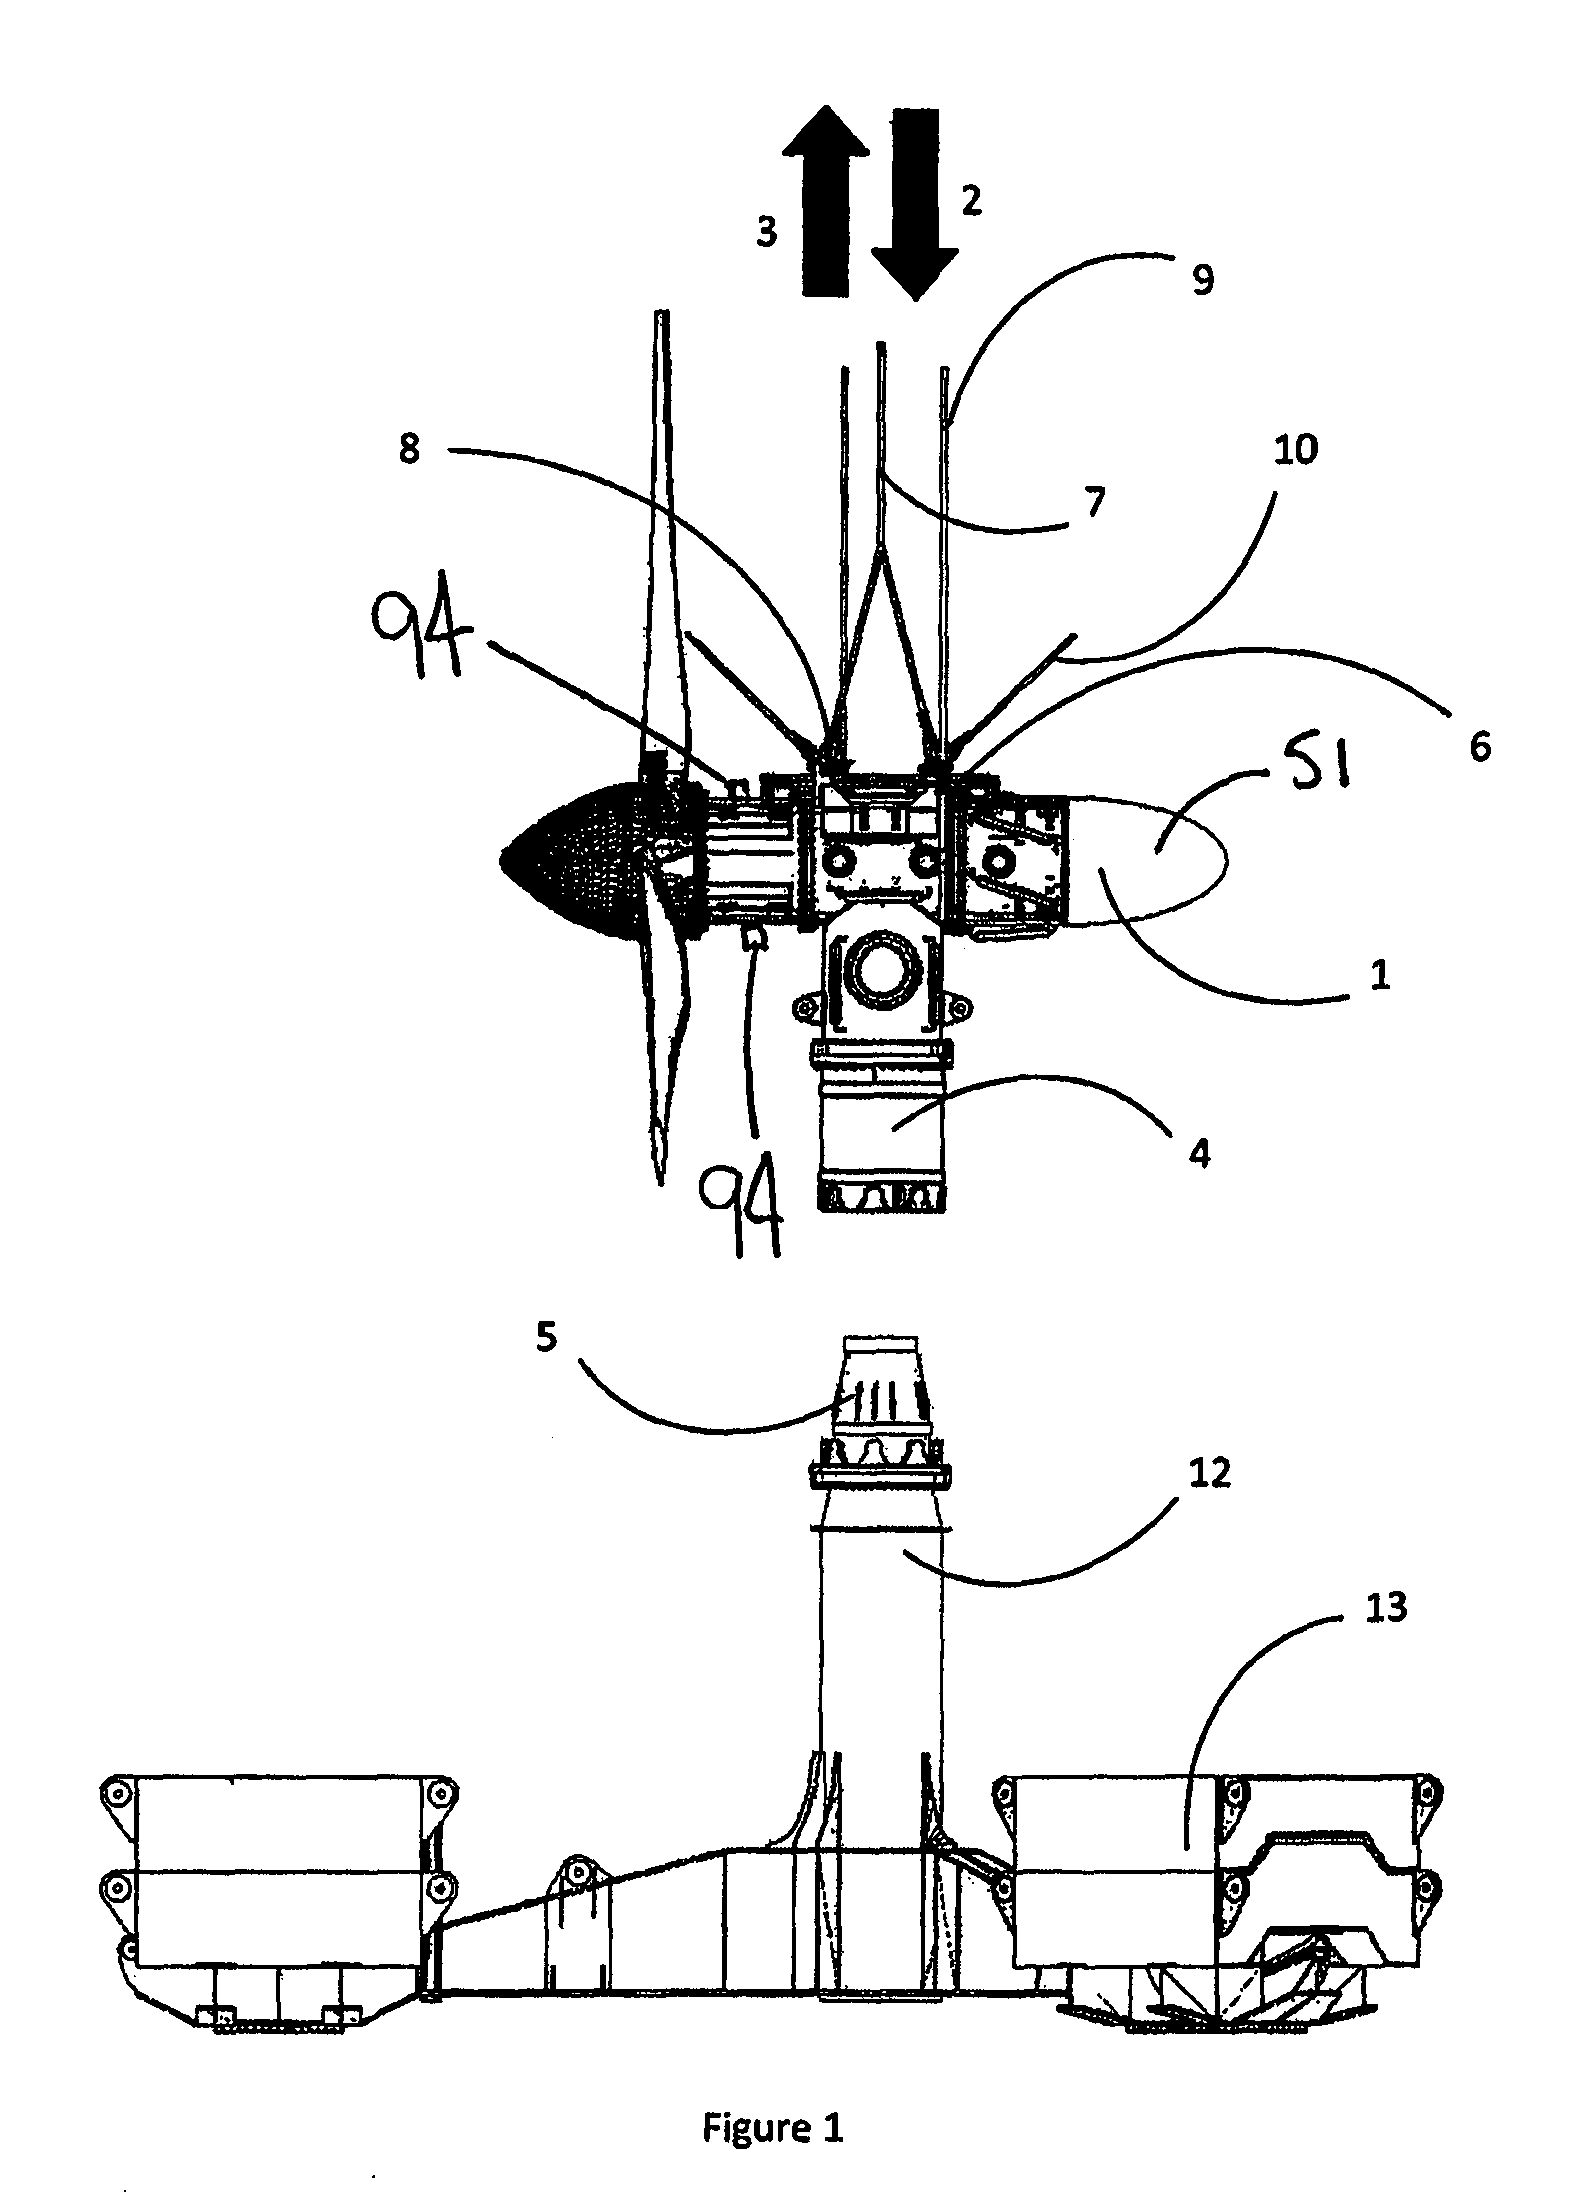 Deployment apparatus and method of deploying an underwater power generator